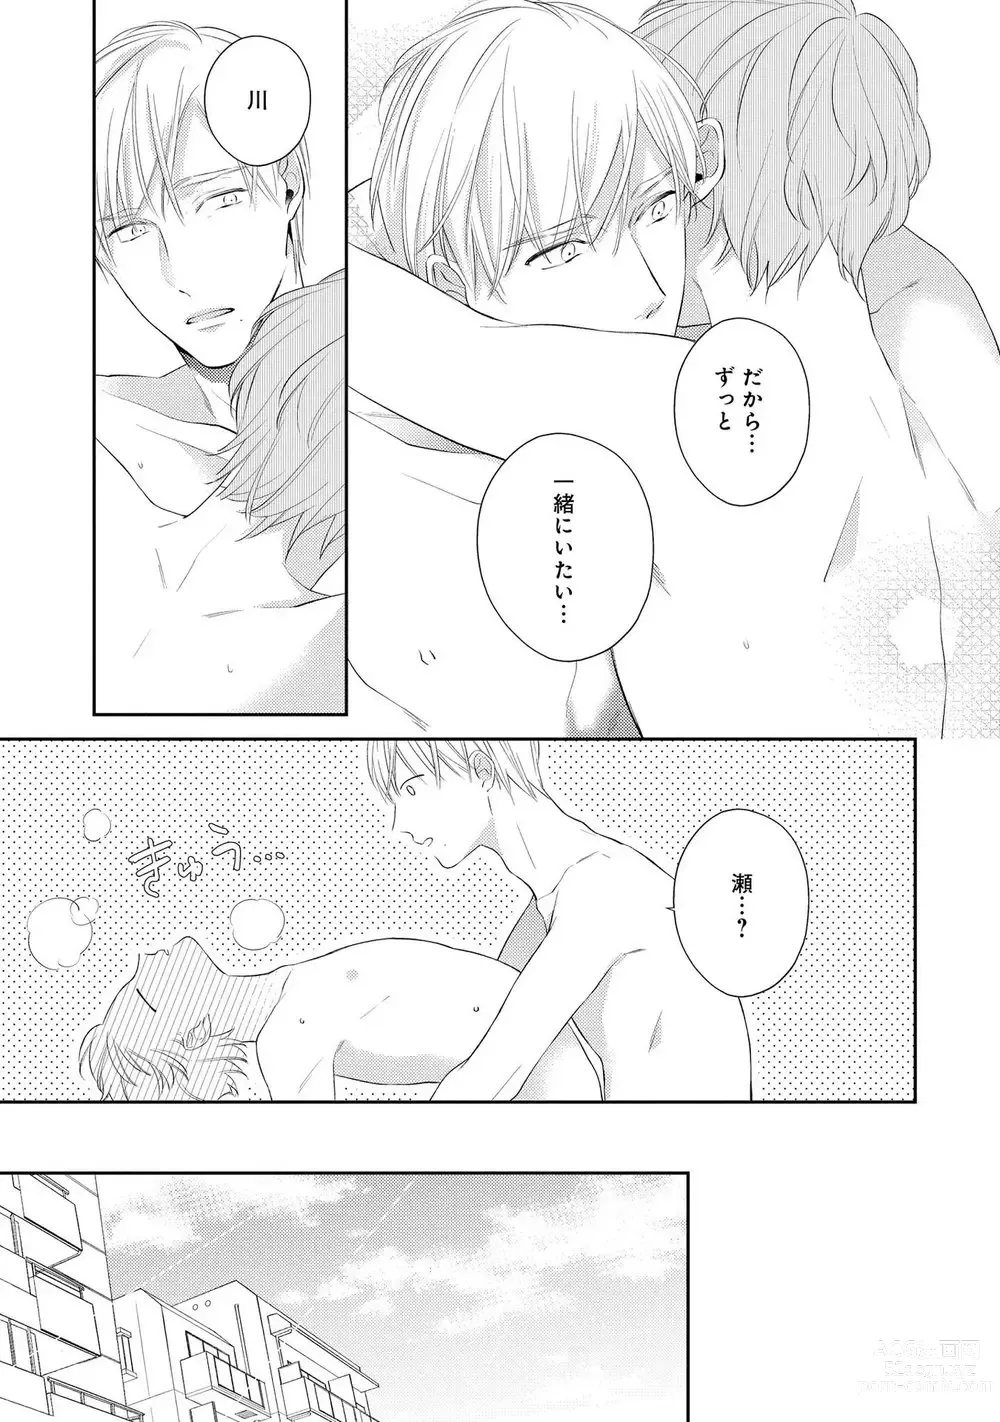 Page 155 of manga NIGHT MILK HEAVEN